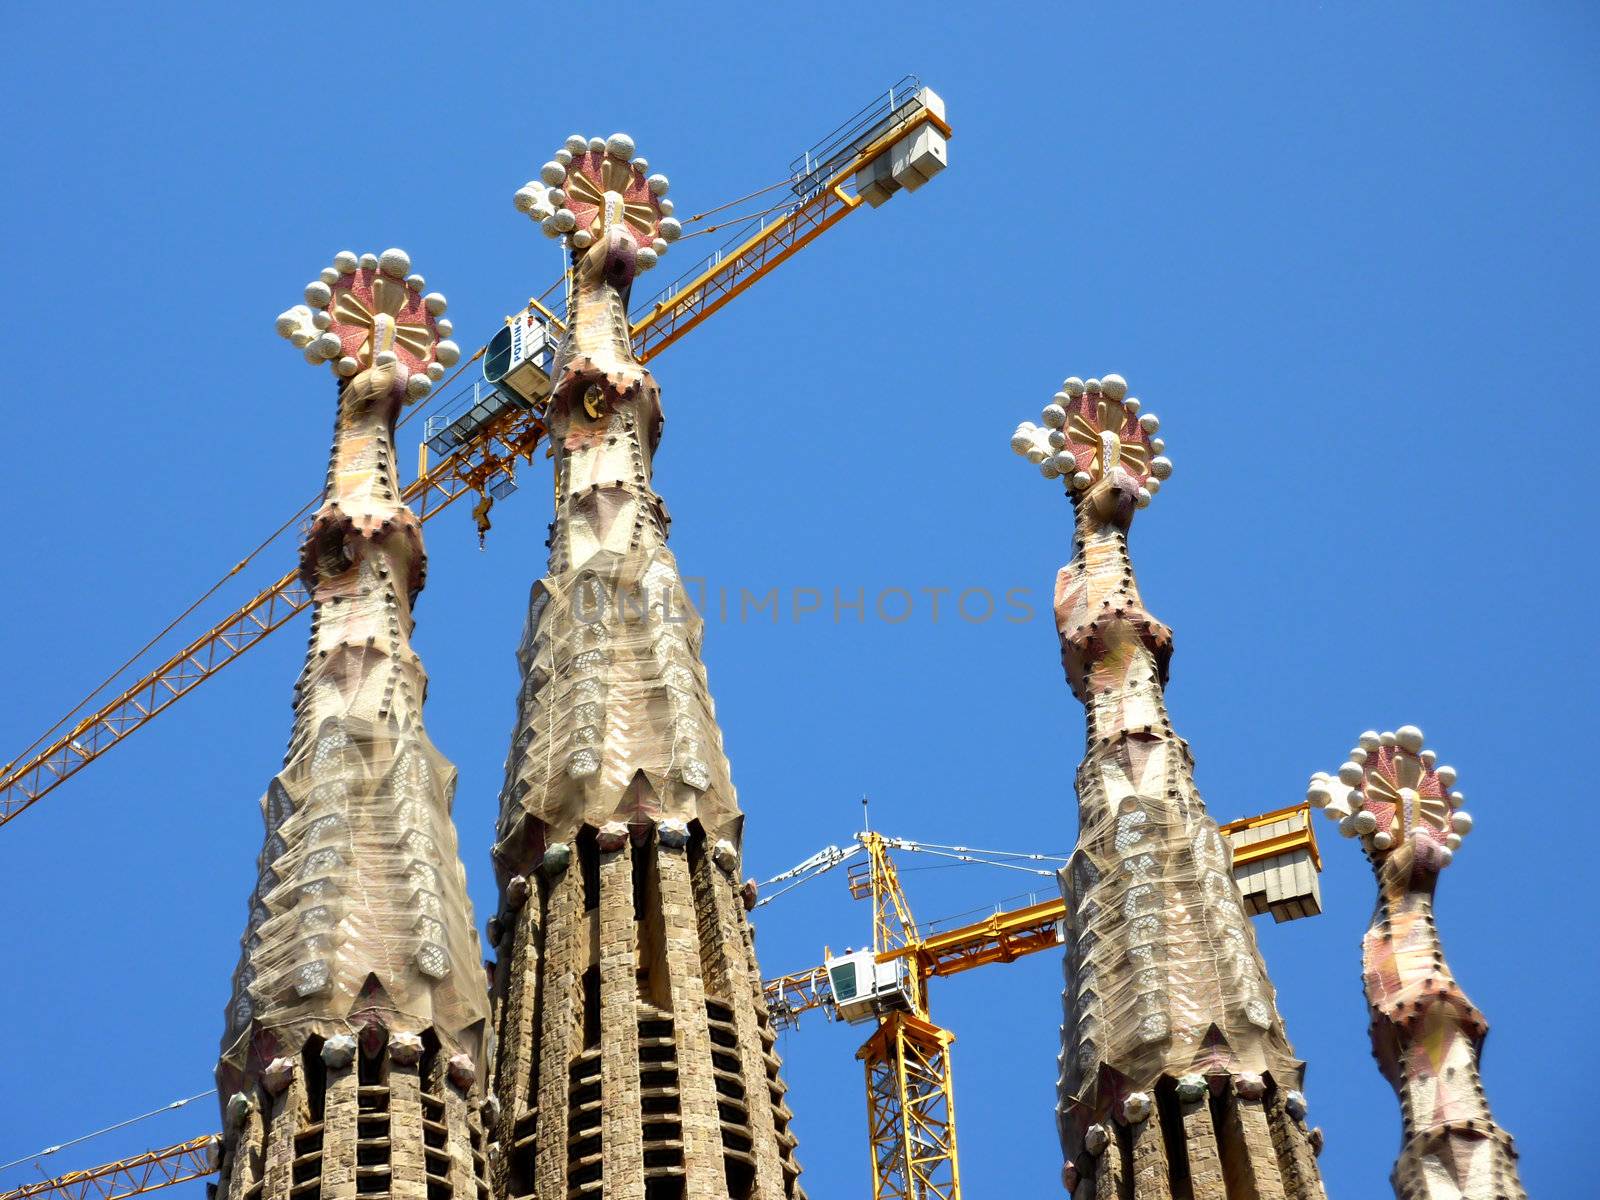 Towers of the Sagrada familia church, Barcelona, Spain by Elenaphotos21